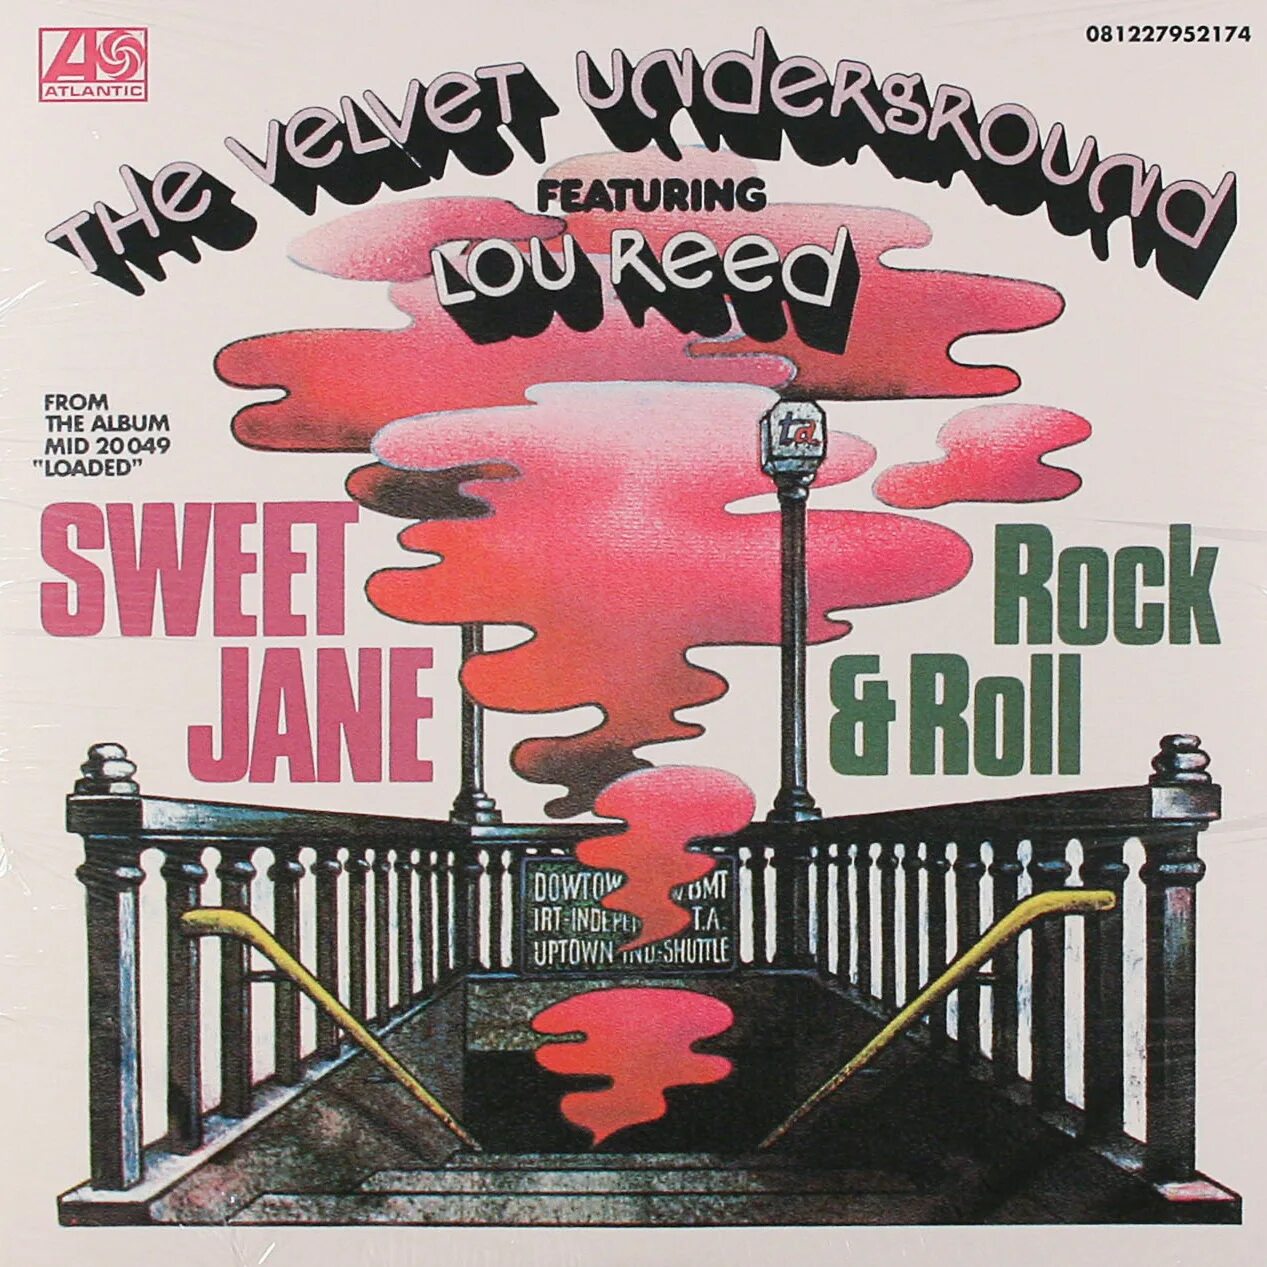 Sweet jane. The Velvet Underground - Sweet Jane. Jane Sweet. Вельвет андеграунд обложка. The Velvet Underground loaded обложка.